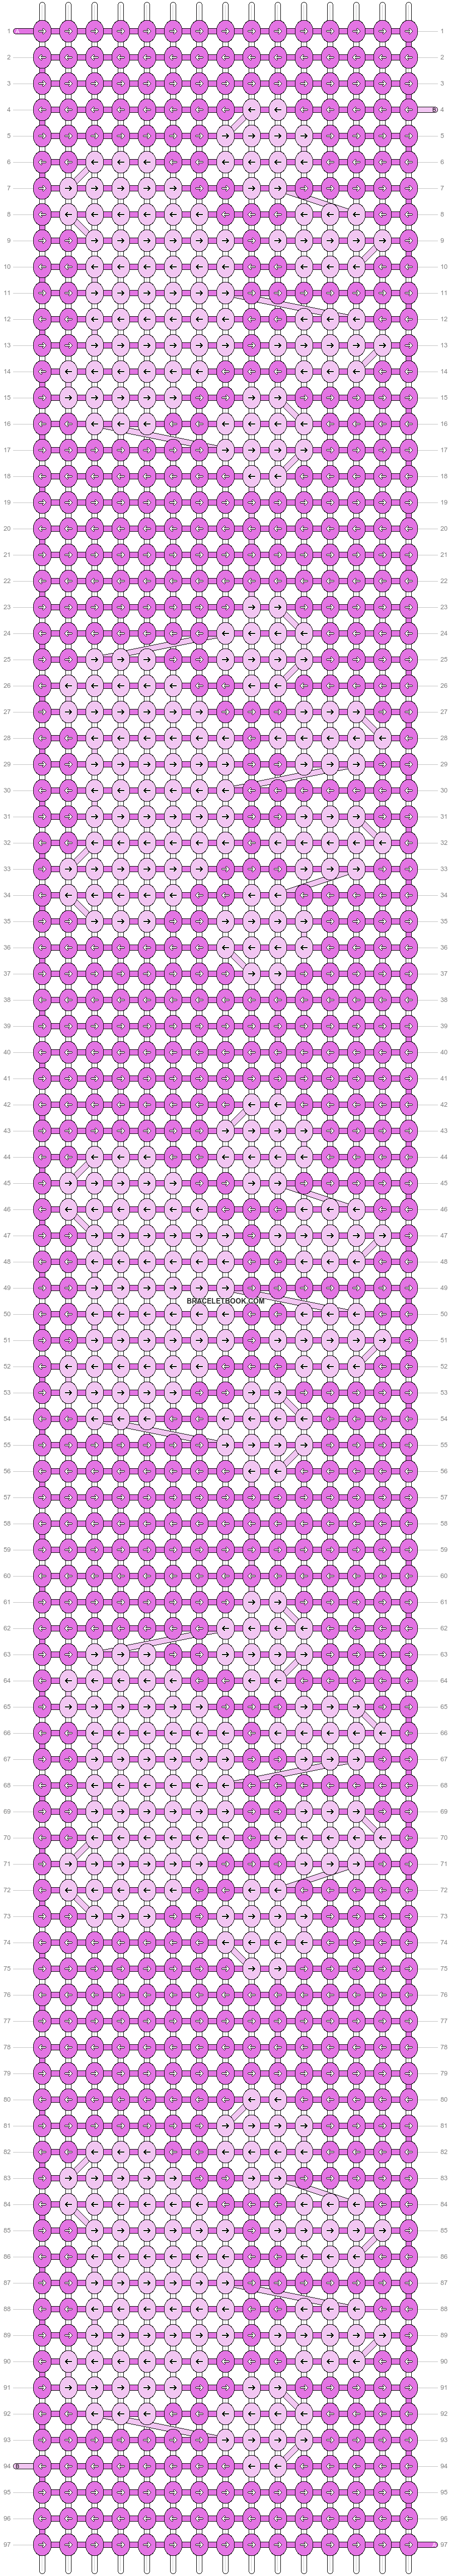 Alpha pattern #40468 variation #51816 pattern